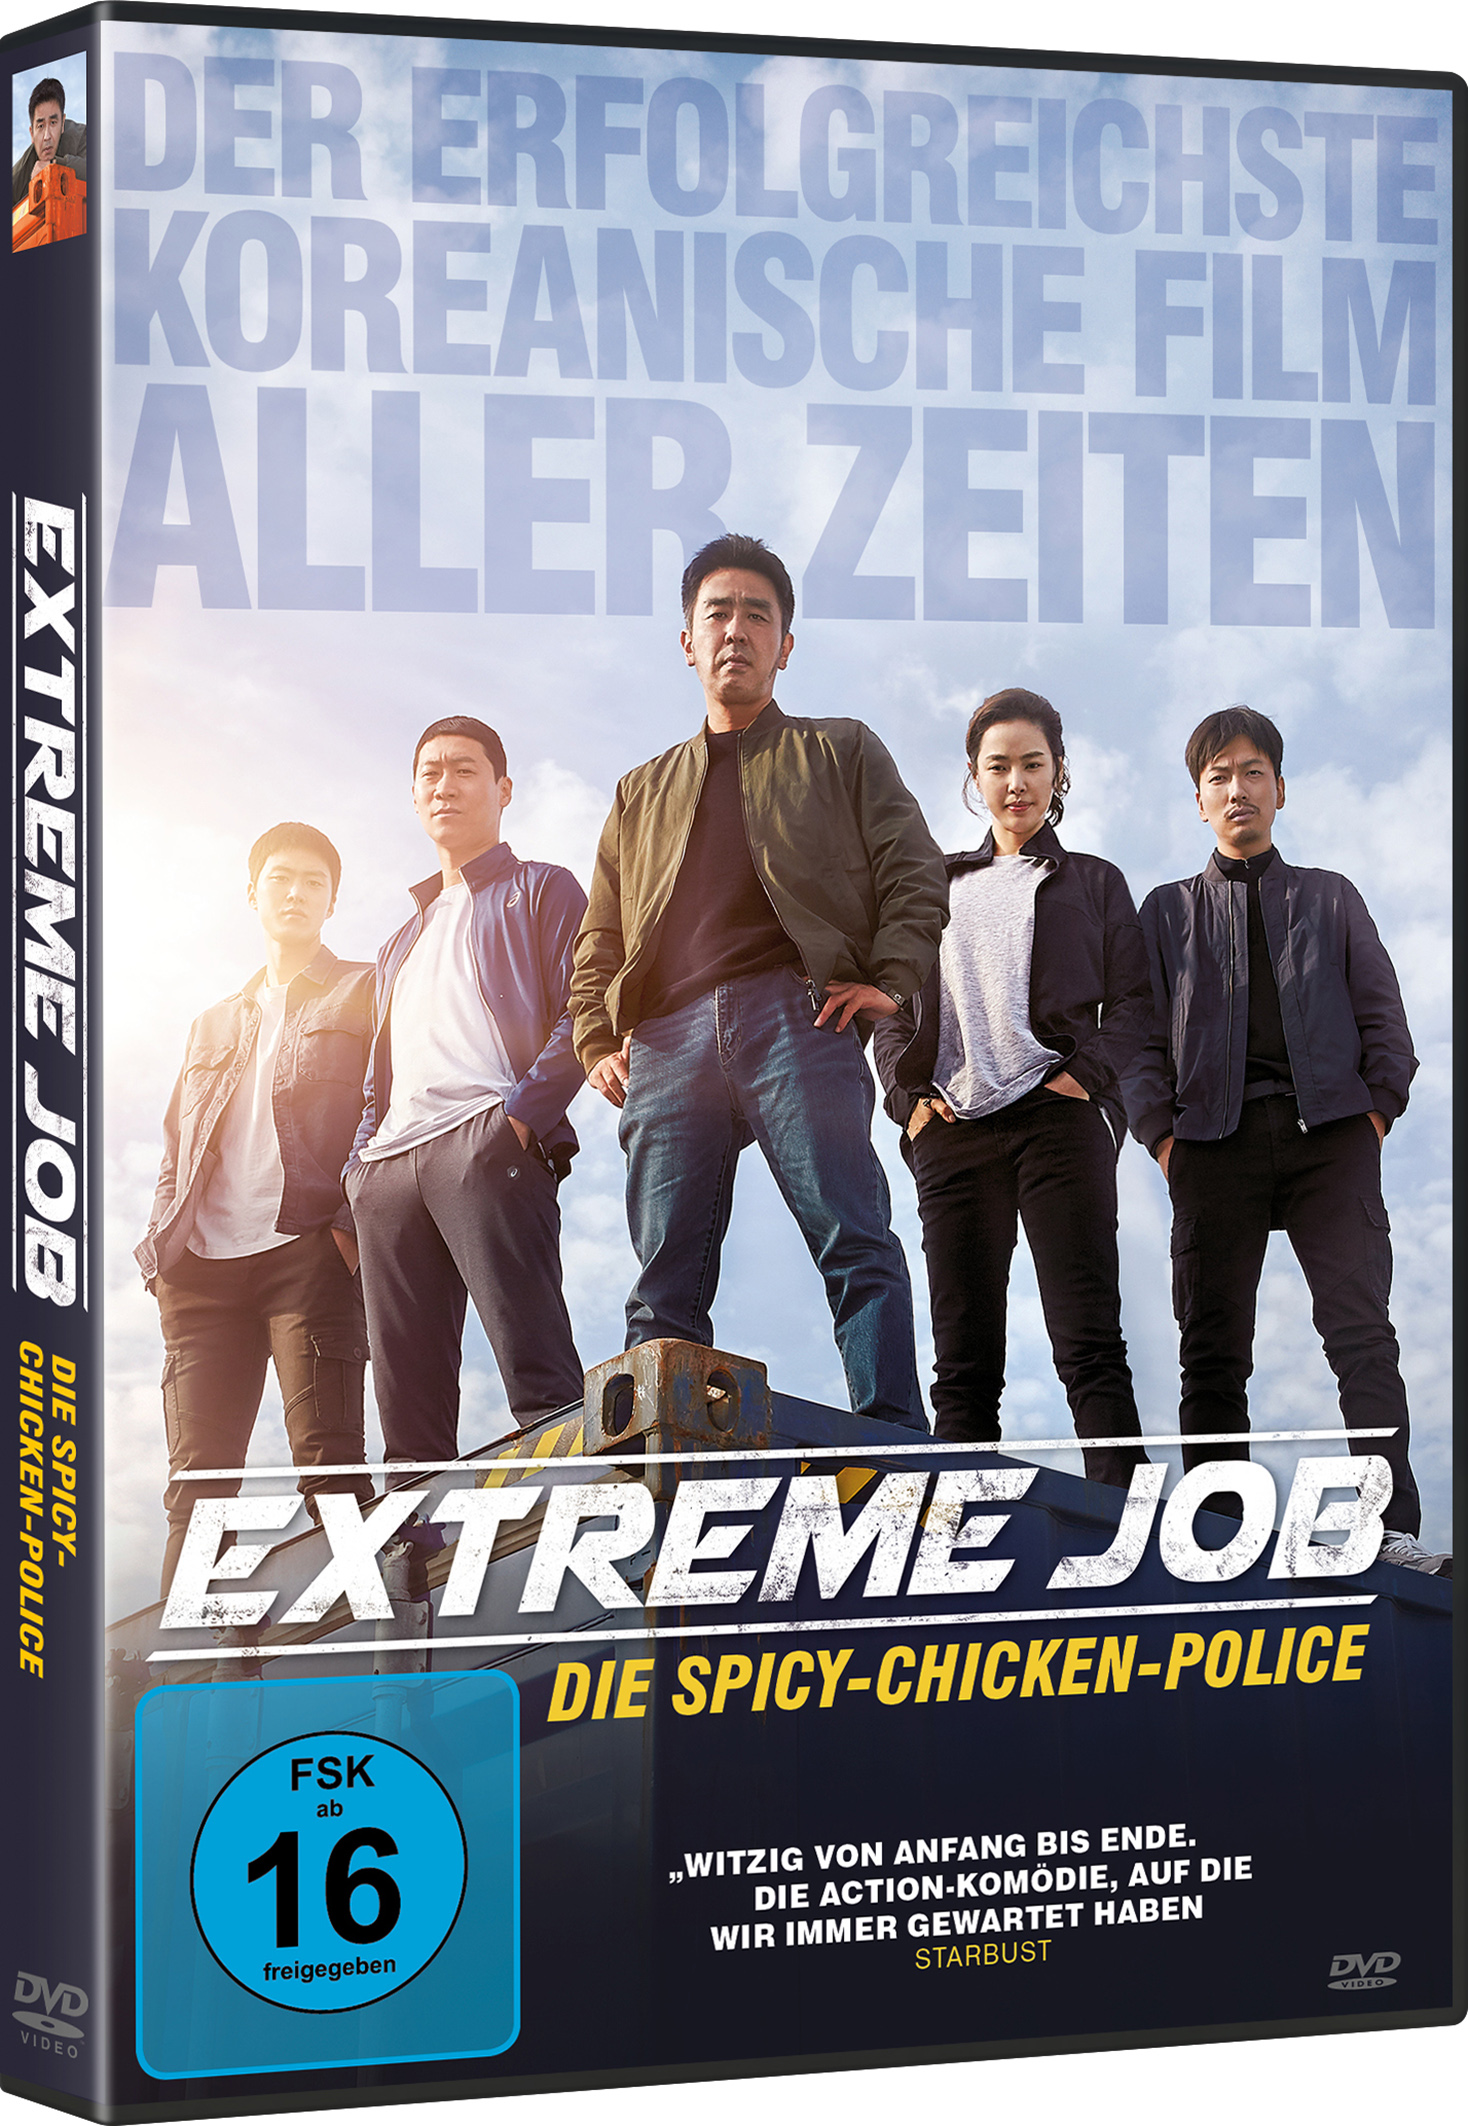 Extreme Job (DVD) Image 2